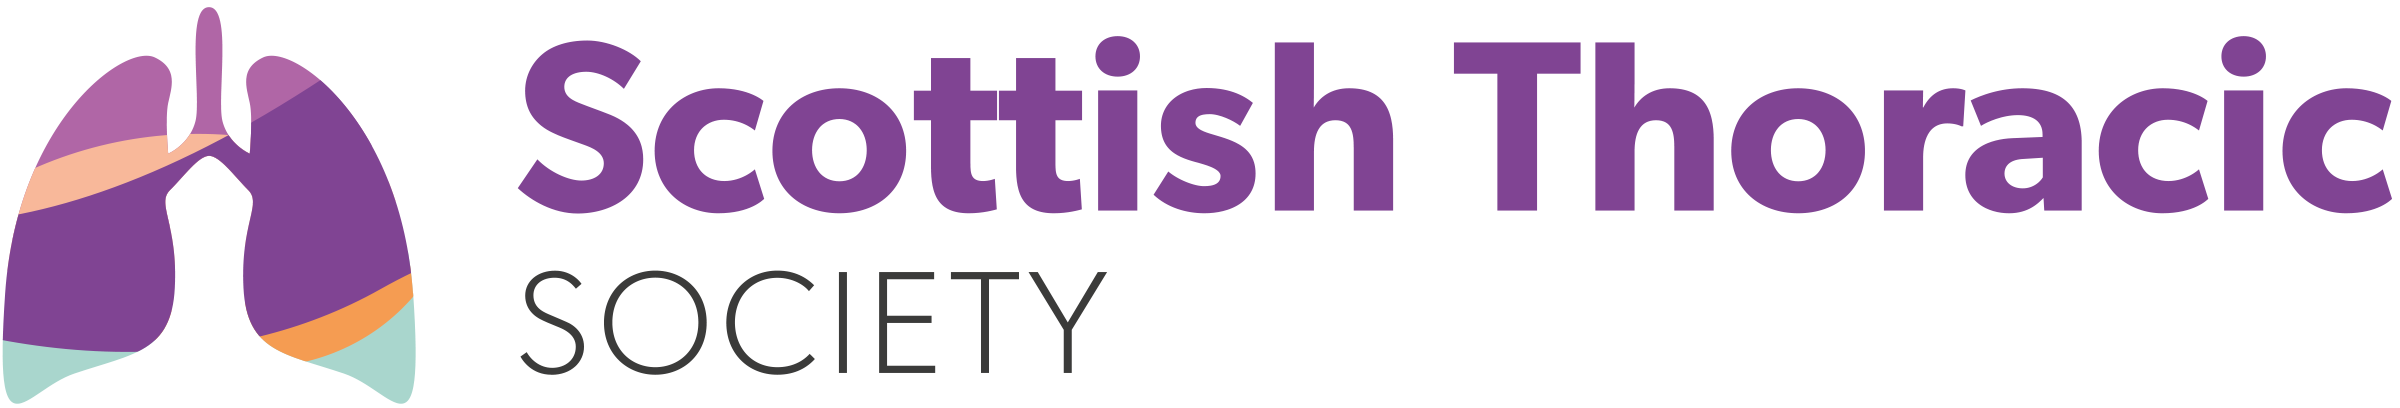 The Scottish Thoracic Society